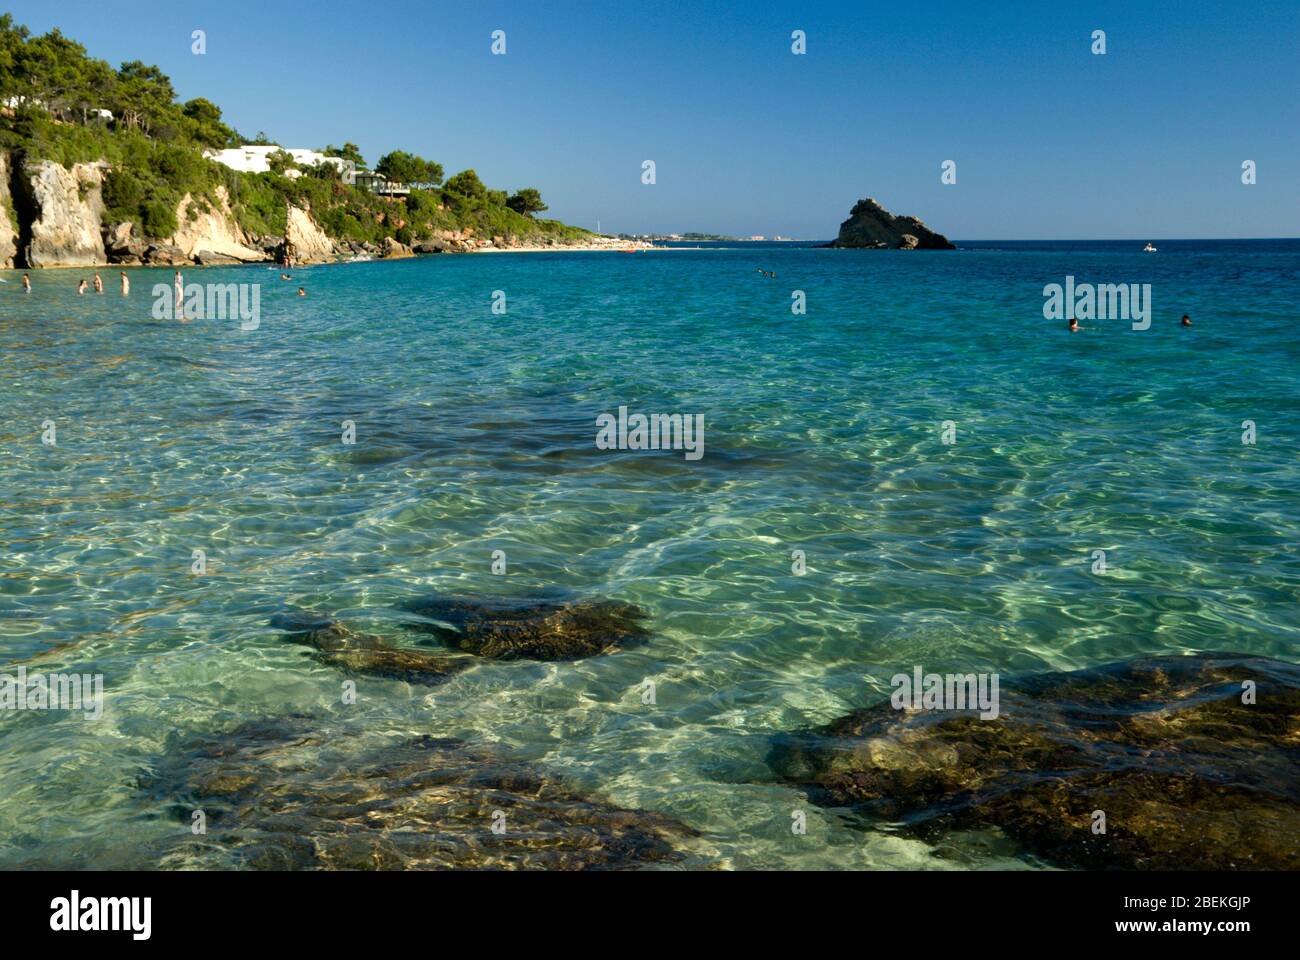 Makri Yalos Beach, Lassi, Argostoli, Kefalonia, Ioniani Islands, Greece. Stock Photo